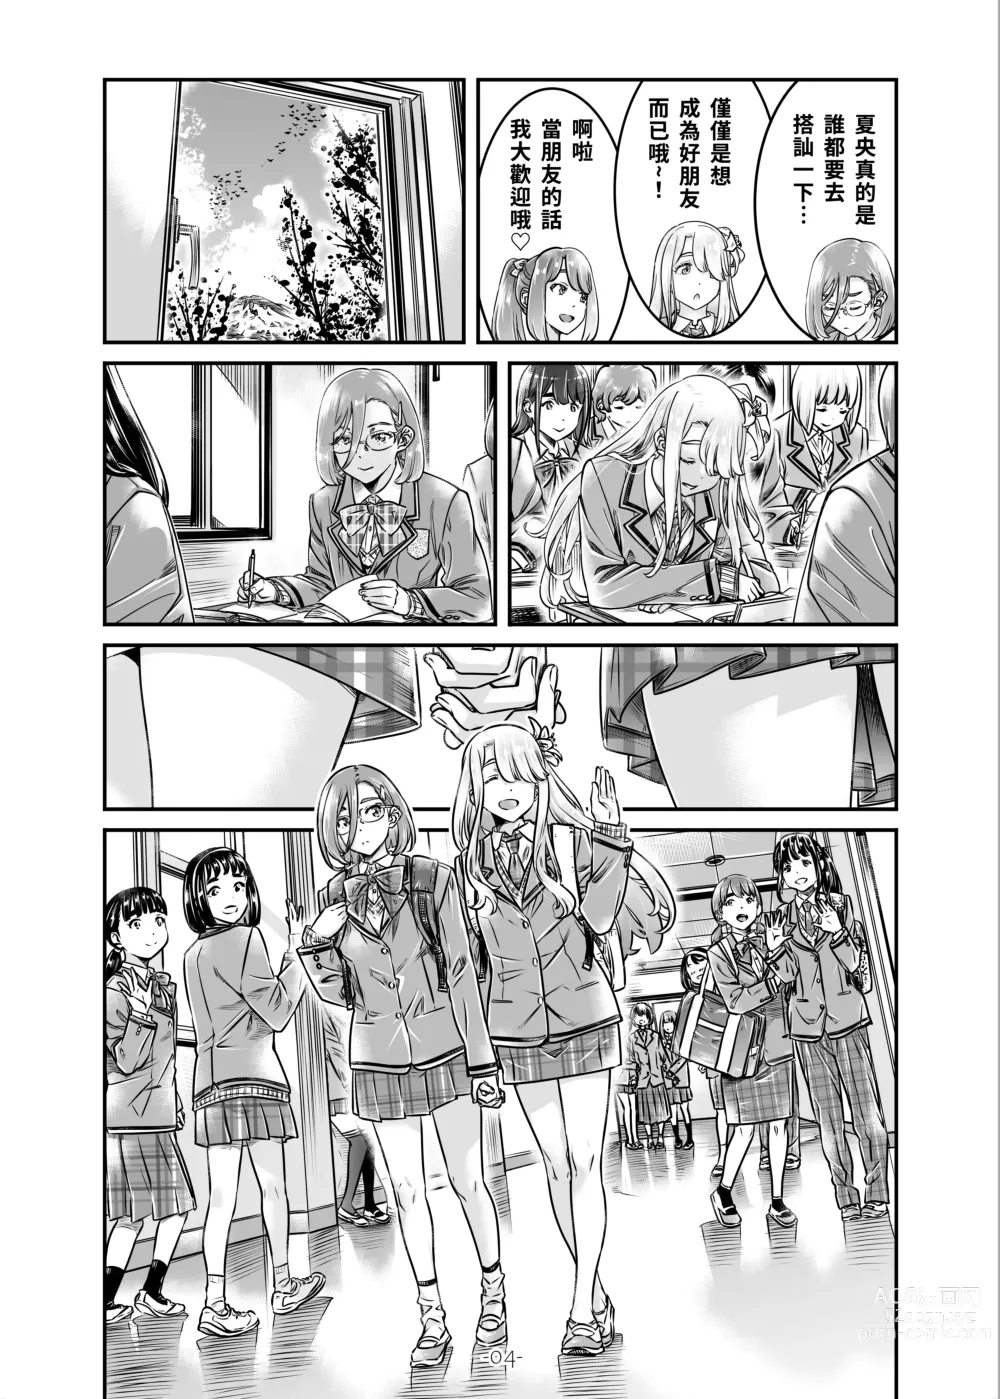 Page 5 of doujinshi Nadeshiko Hiyori 2nd season - SERIES of GIRLs LOE STORY ~episode 3~